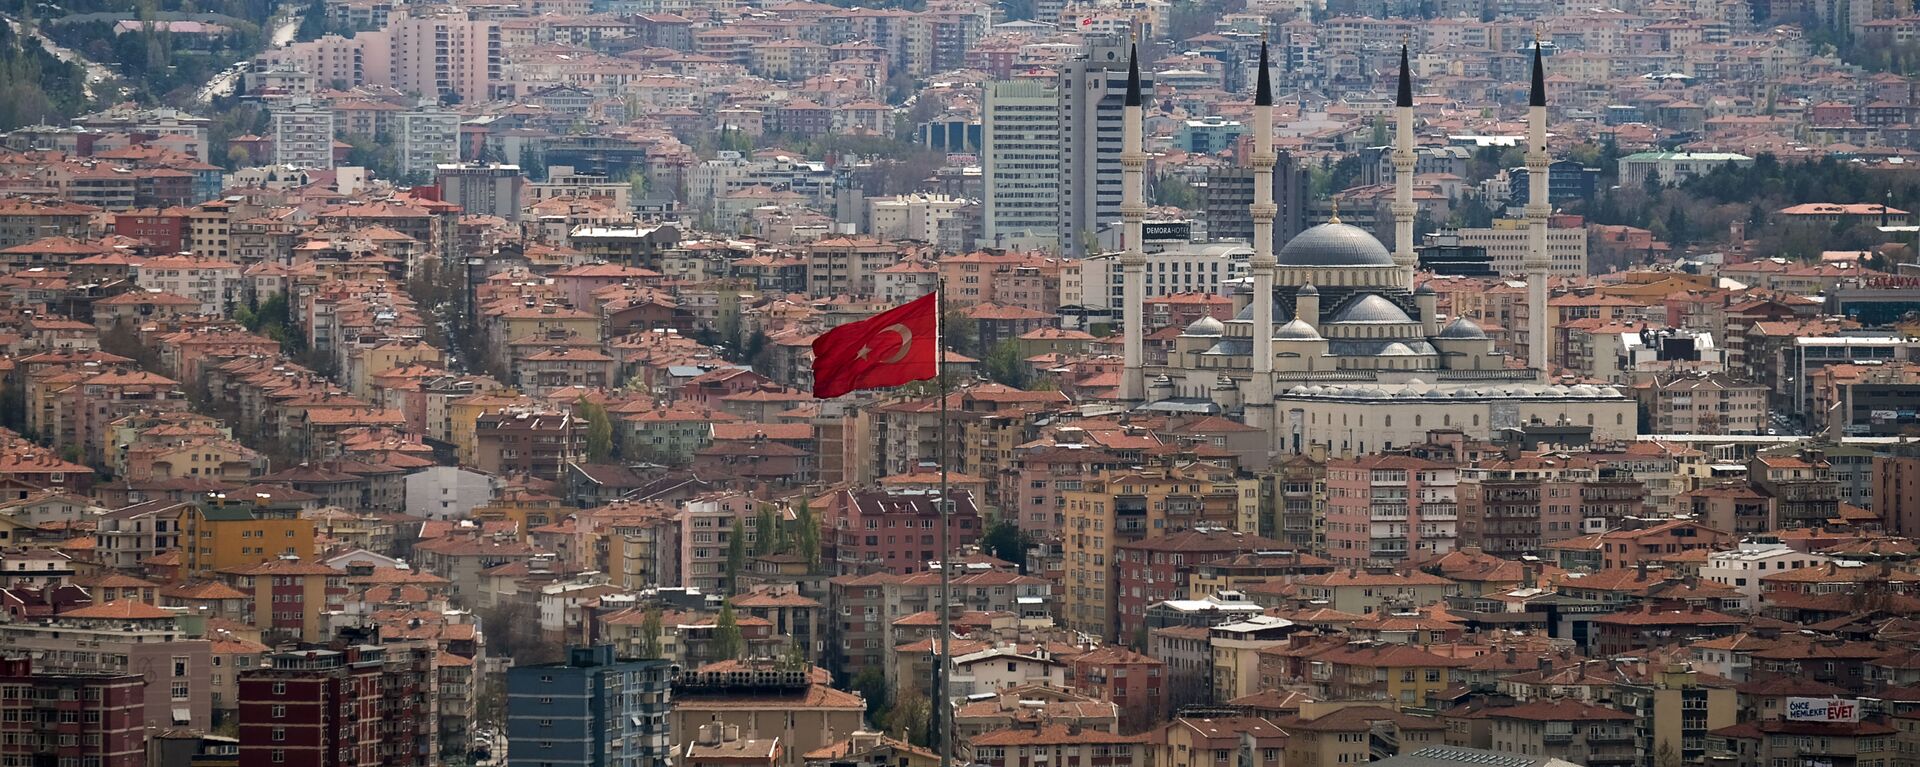 Вид на город Анкара, фото из архива - Sputnik Азербайджан, 1920, 19.10.2021